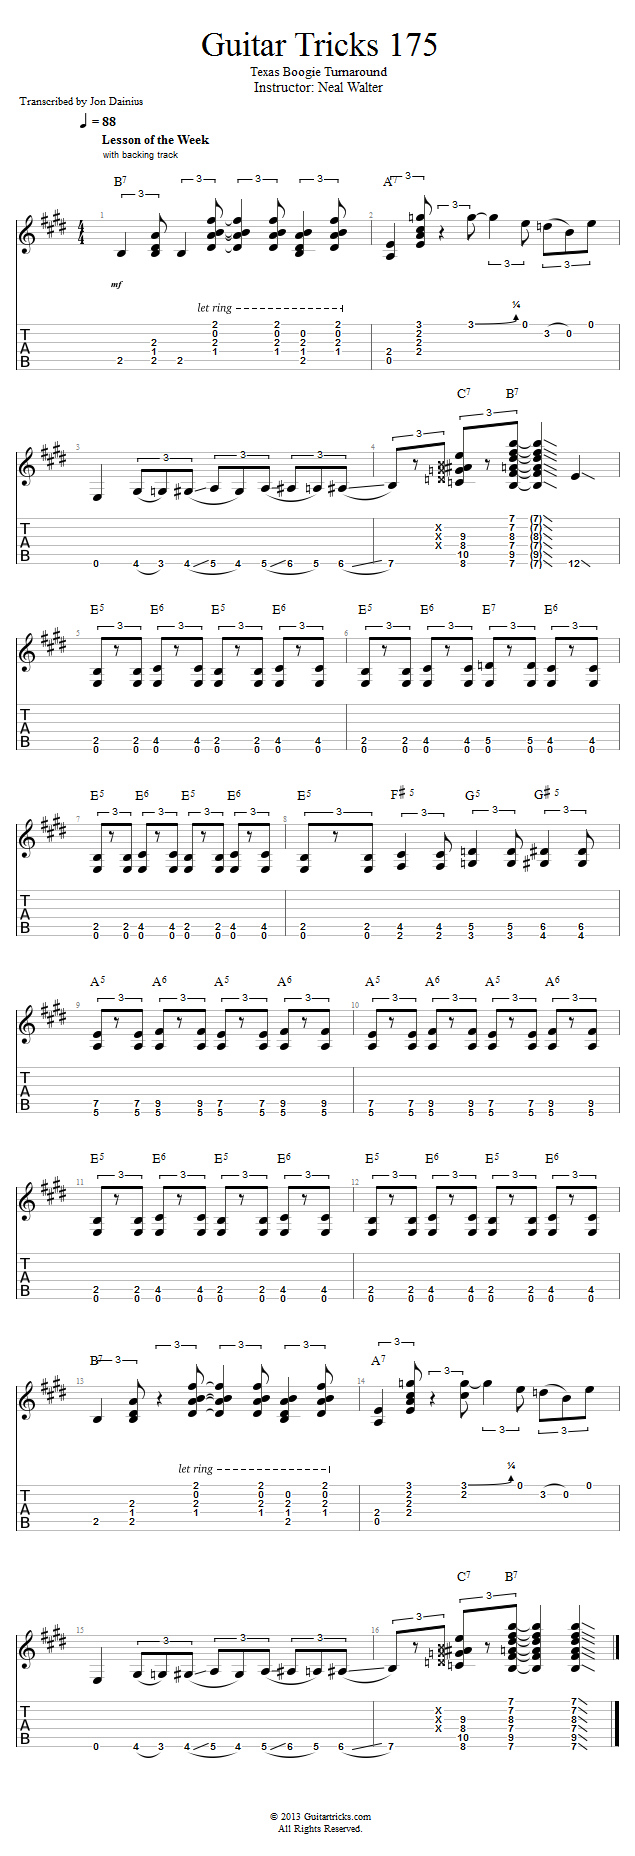 Guitar Tricks 175: Texas Boogie Turnaround song notation